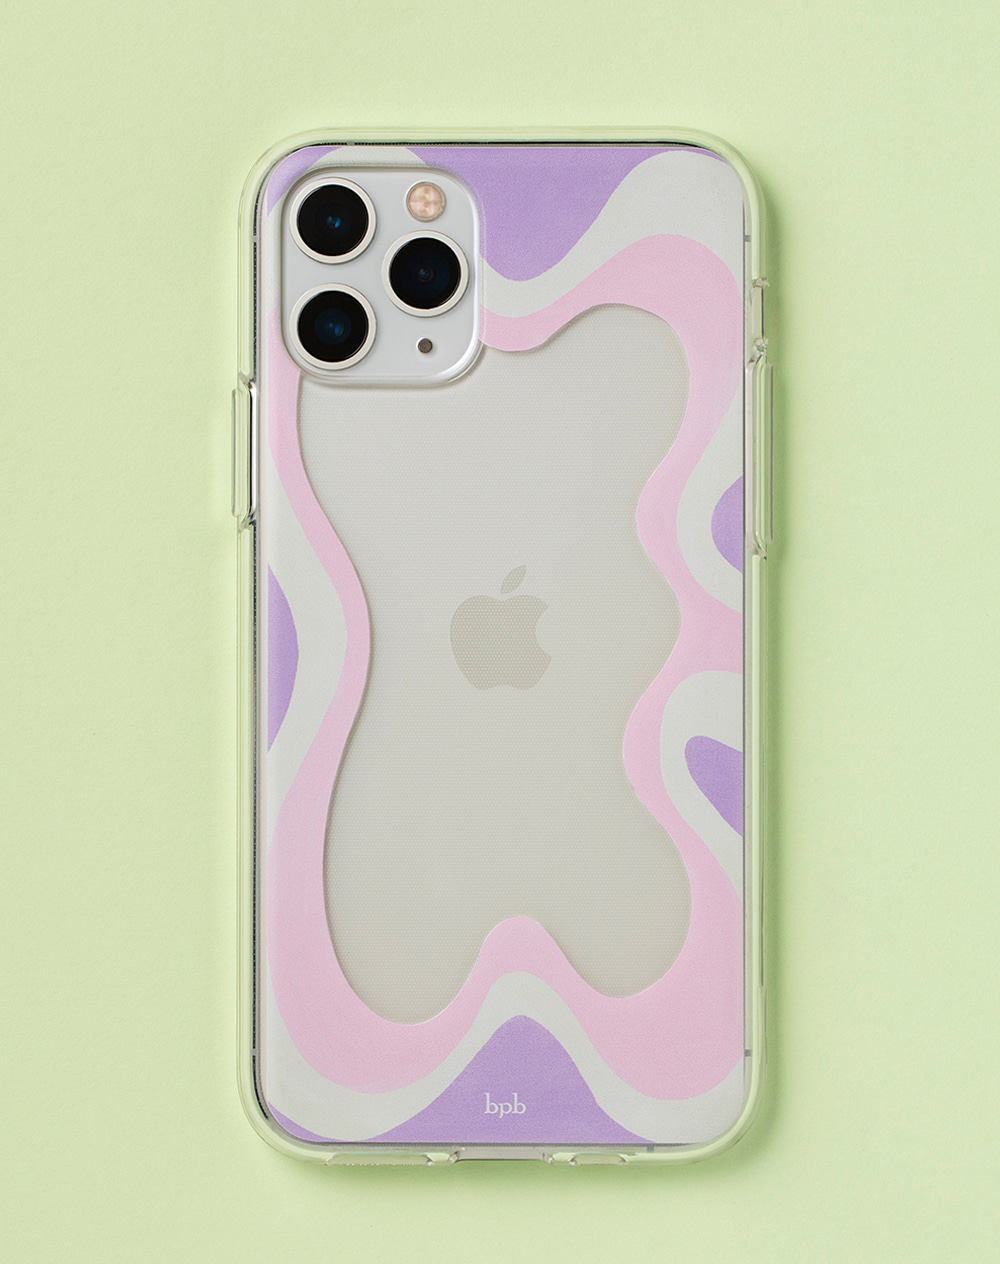 Waves iPhone Case-violet (6차리오더)